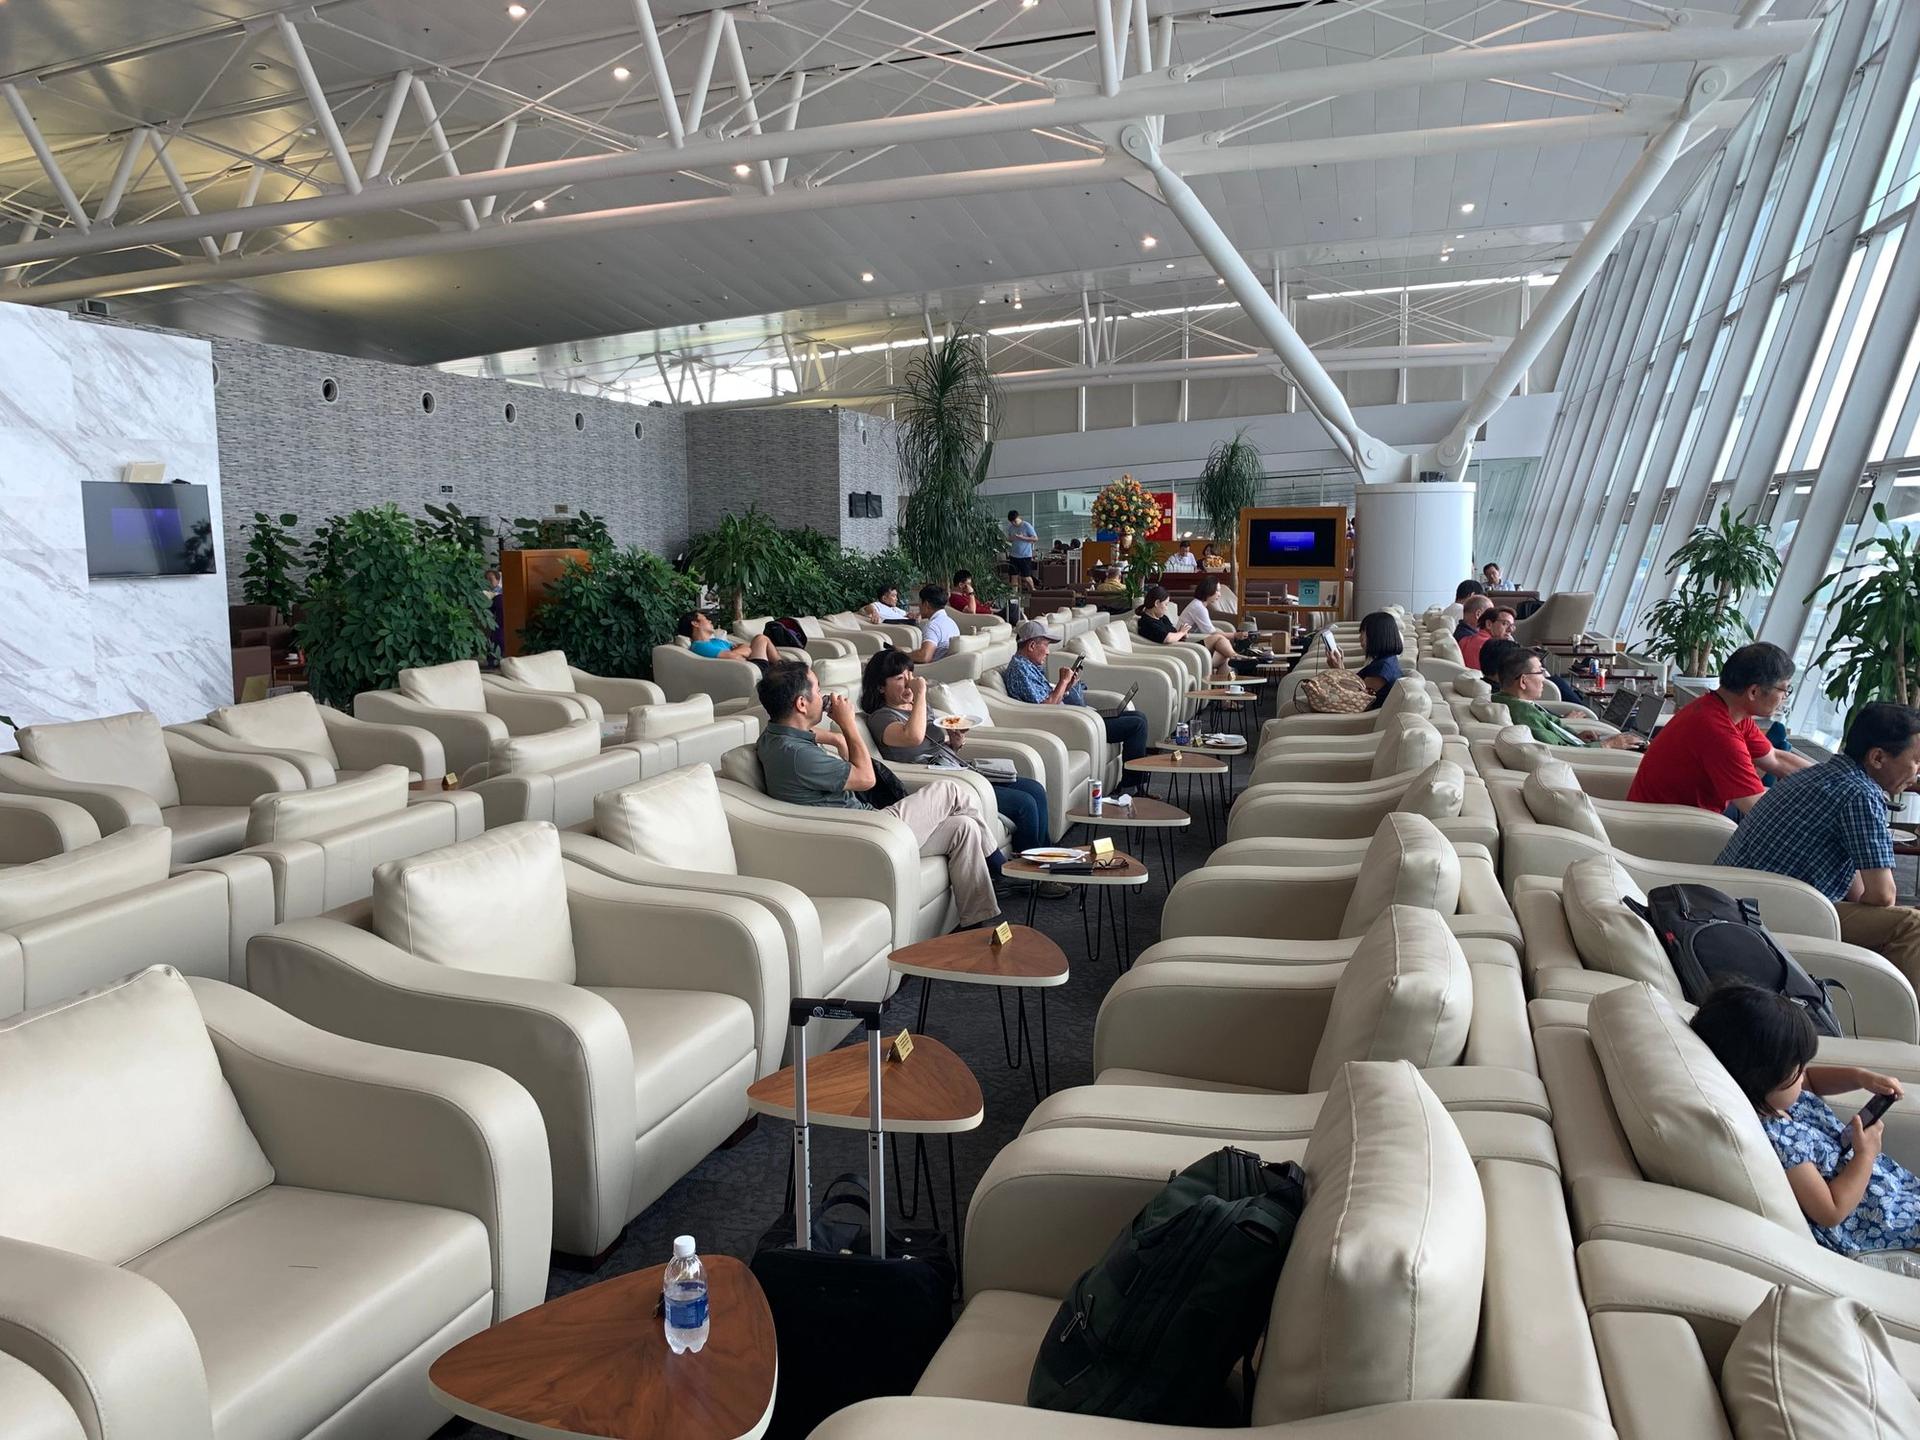 Noi Bai International Airport Business Lounge image 15 of 26